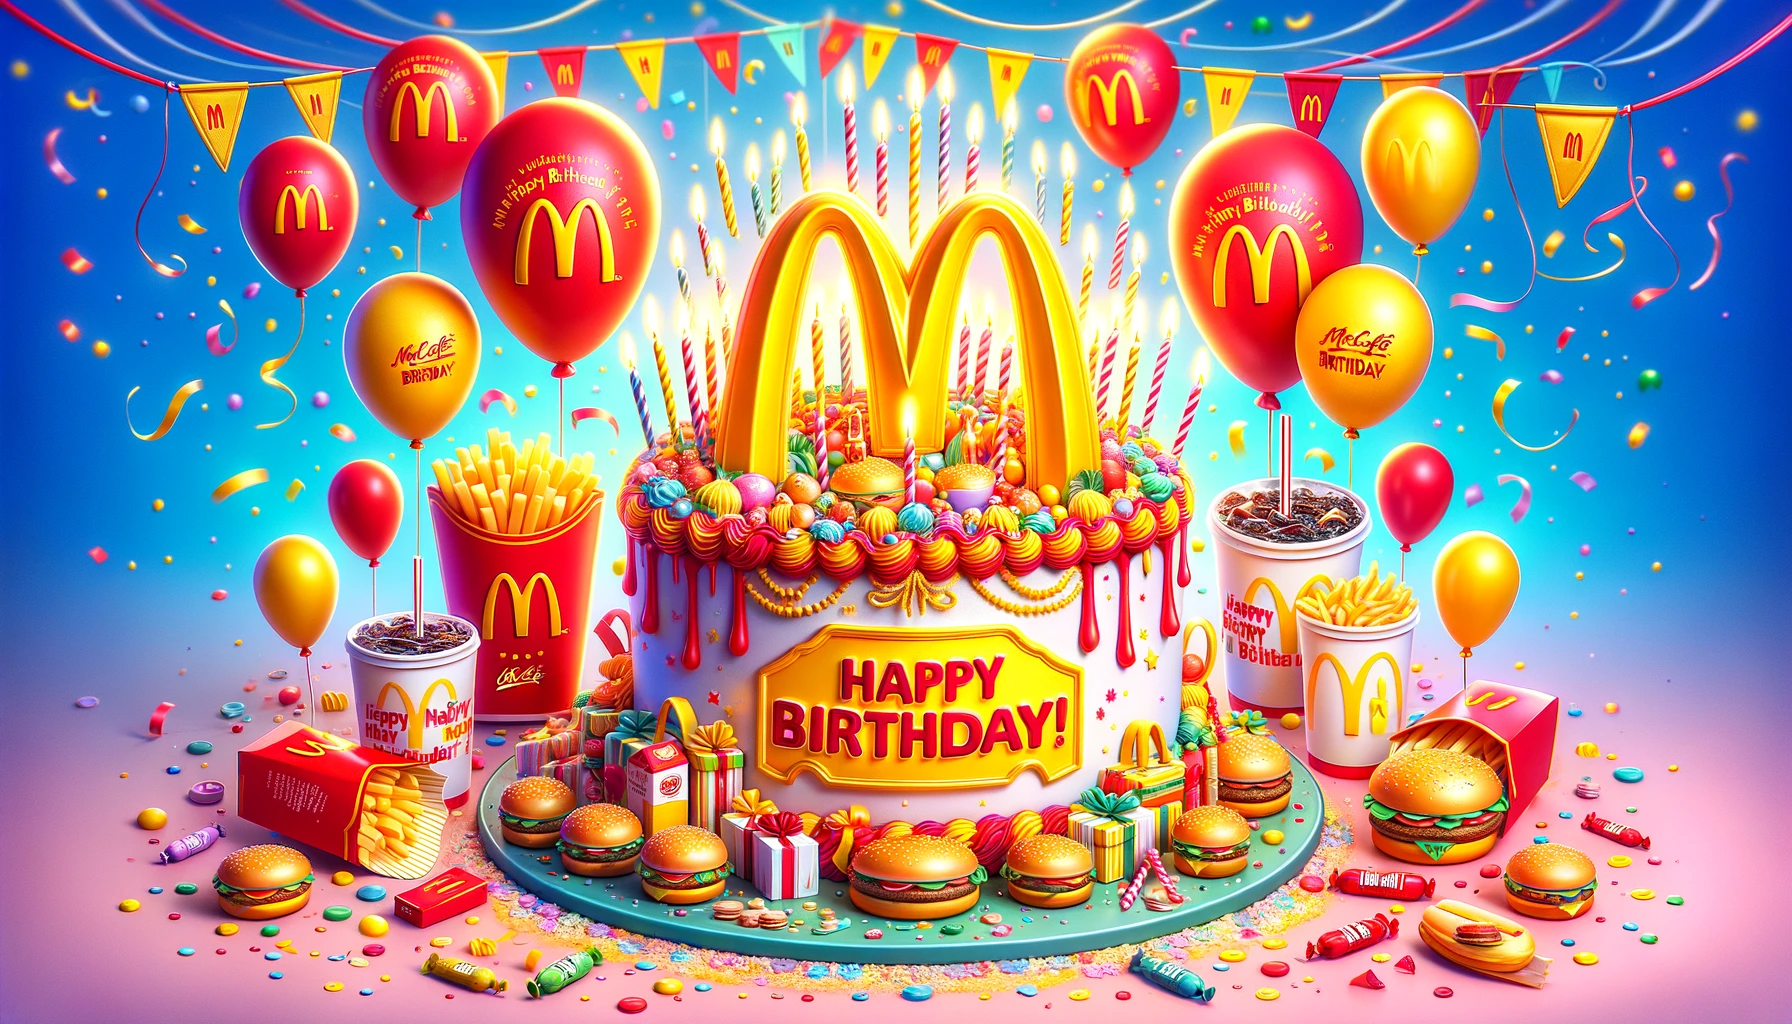 McDonalds Birthday Reward 2024